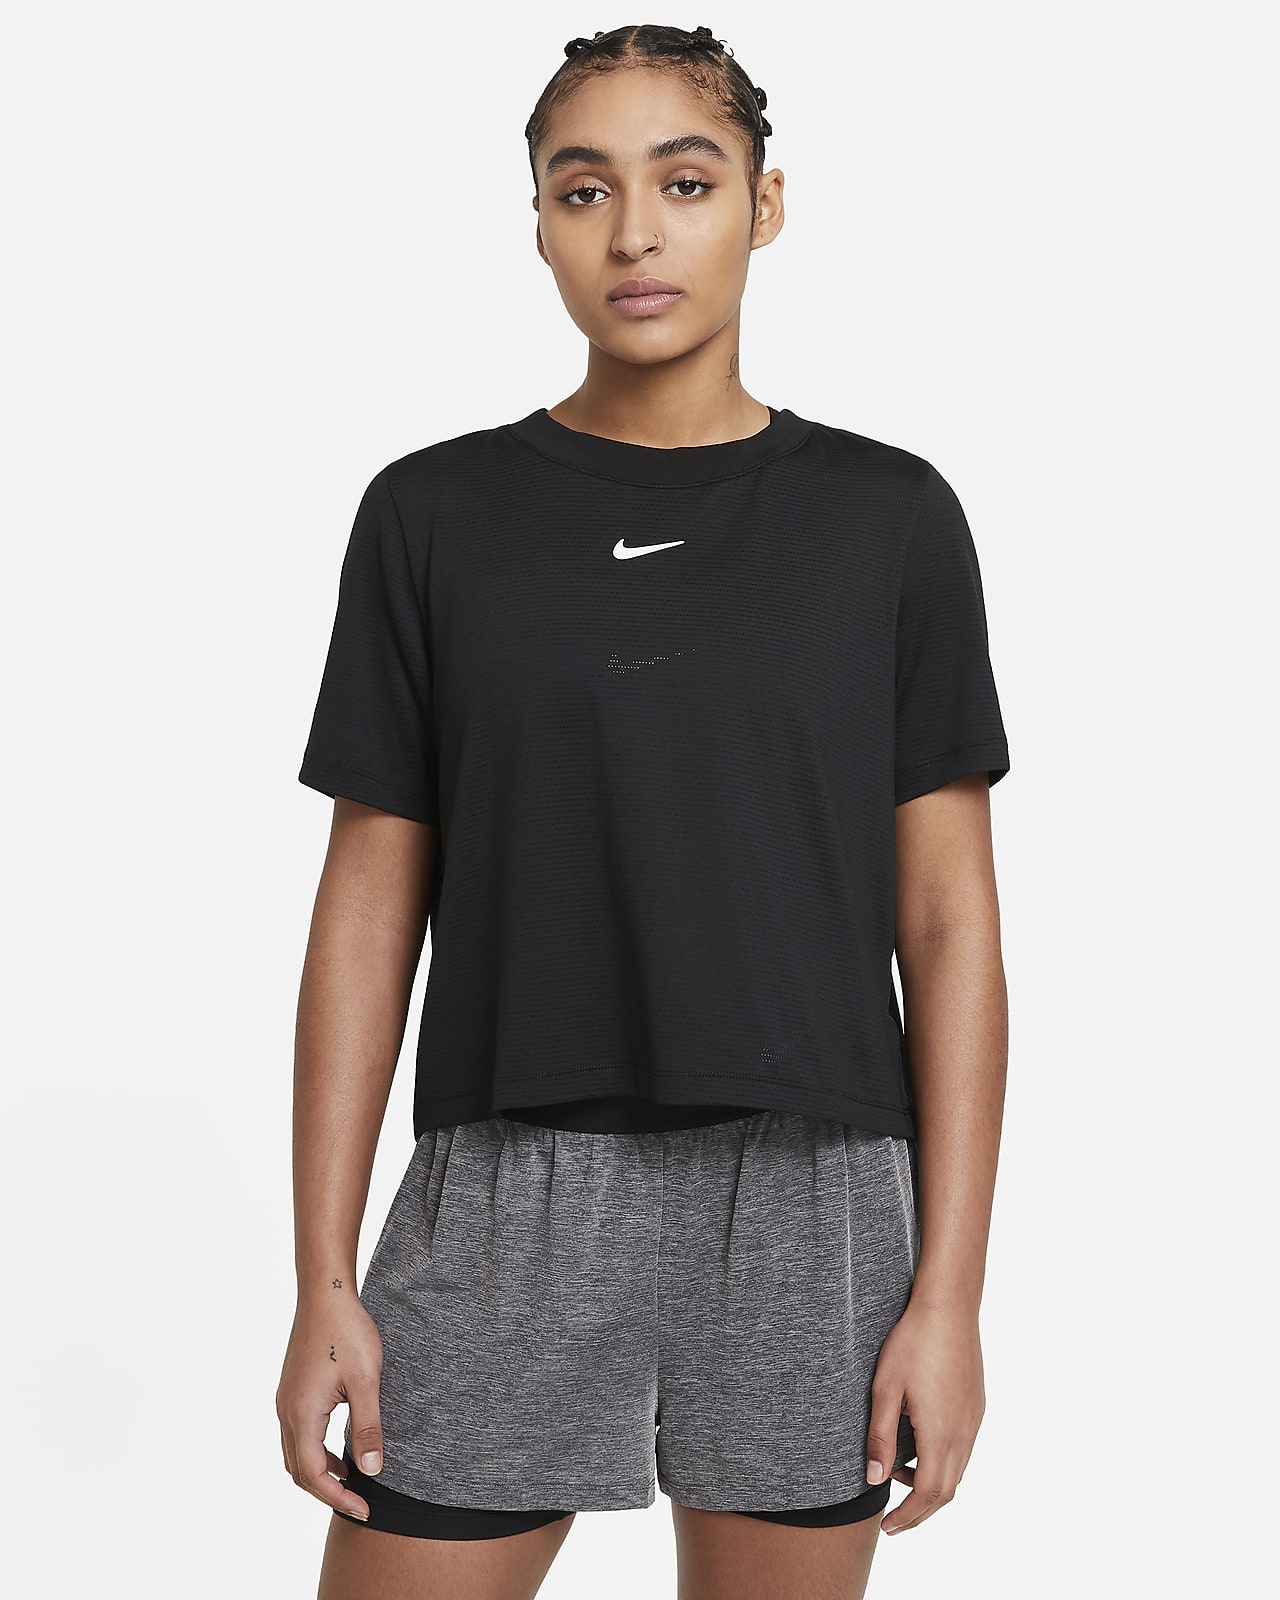 NikeCourt Advantage Women's Short-Sleeve Tennis Top